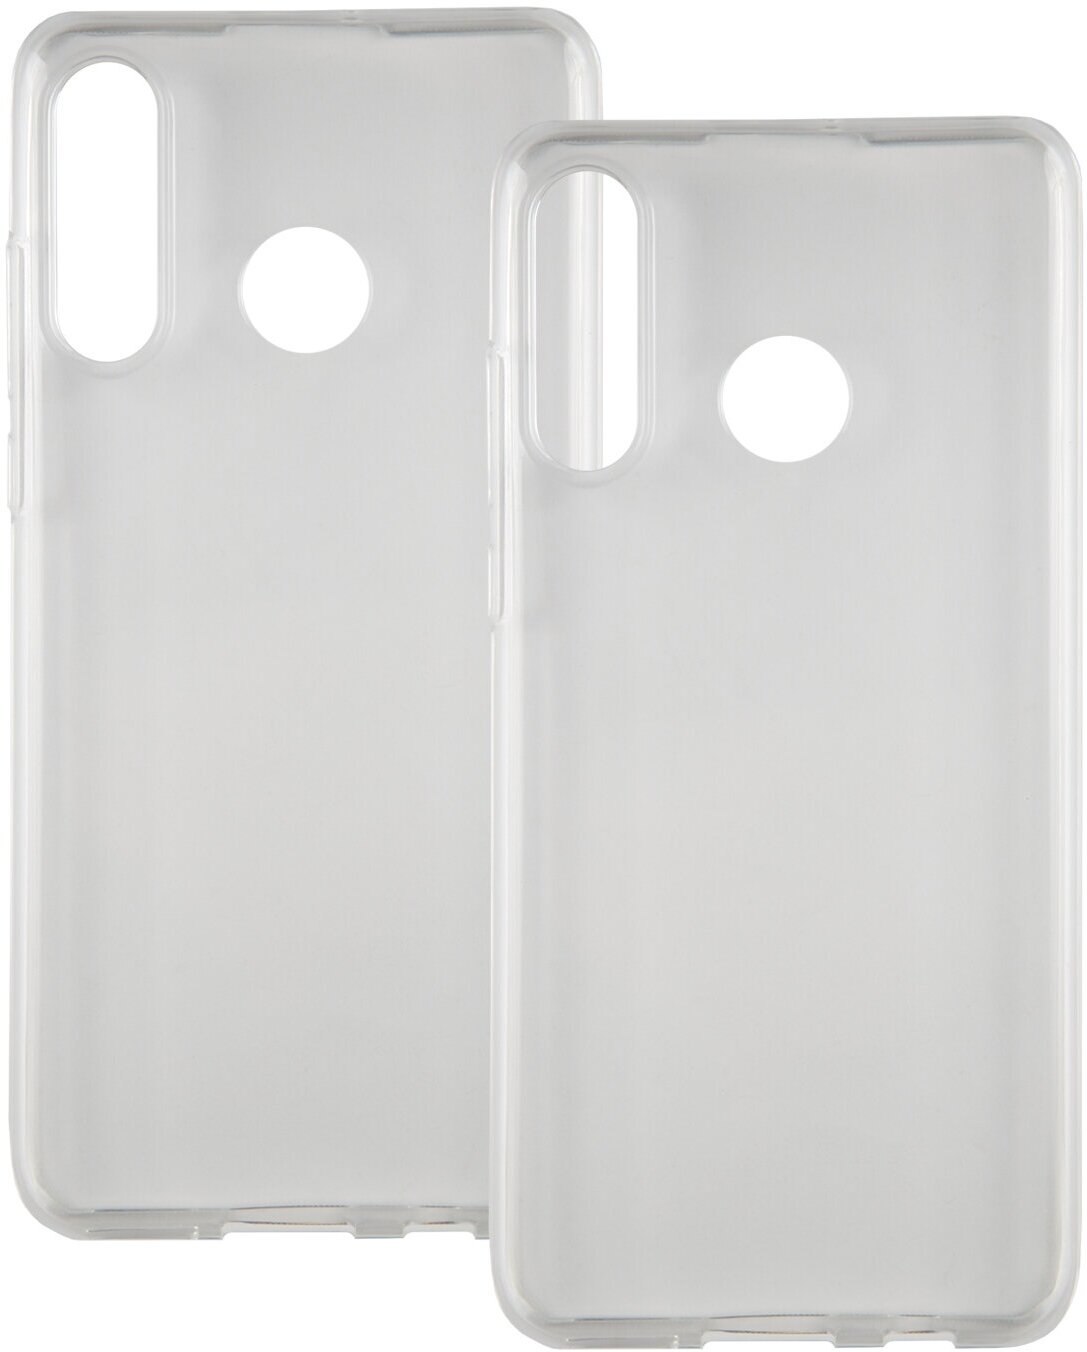 Накладка на Huawei P30 Lite/Силиконовый чехол для телефона Хуавей П30 Лайт/Бампер/Защита от царапин/Накладка силикон/Защитный чехол прозрачный, 2 шт.